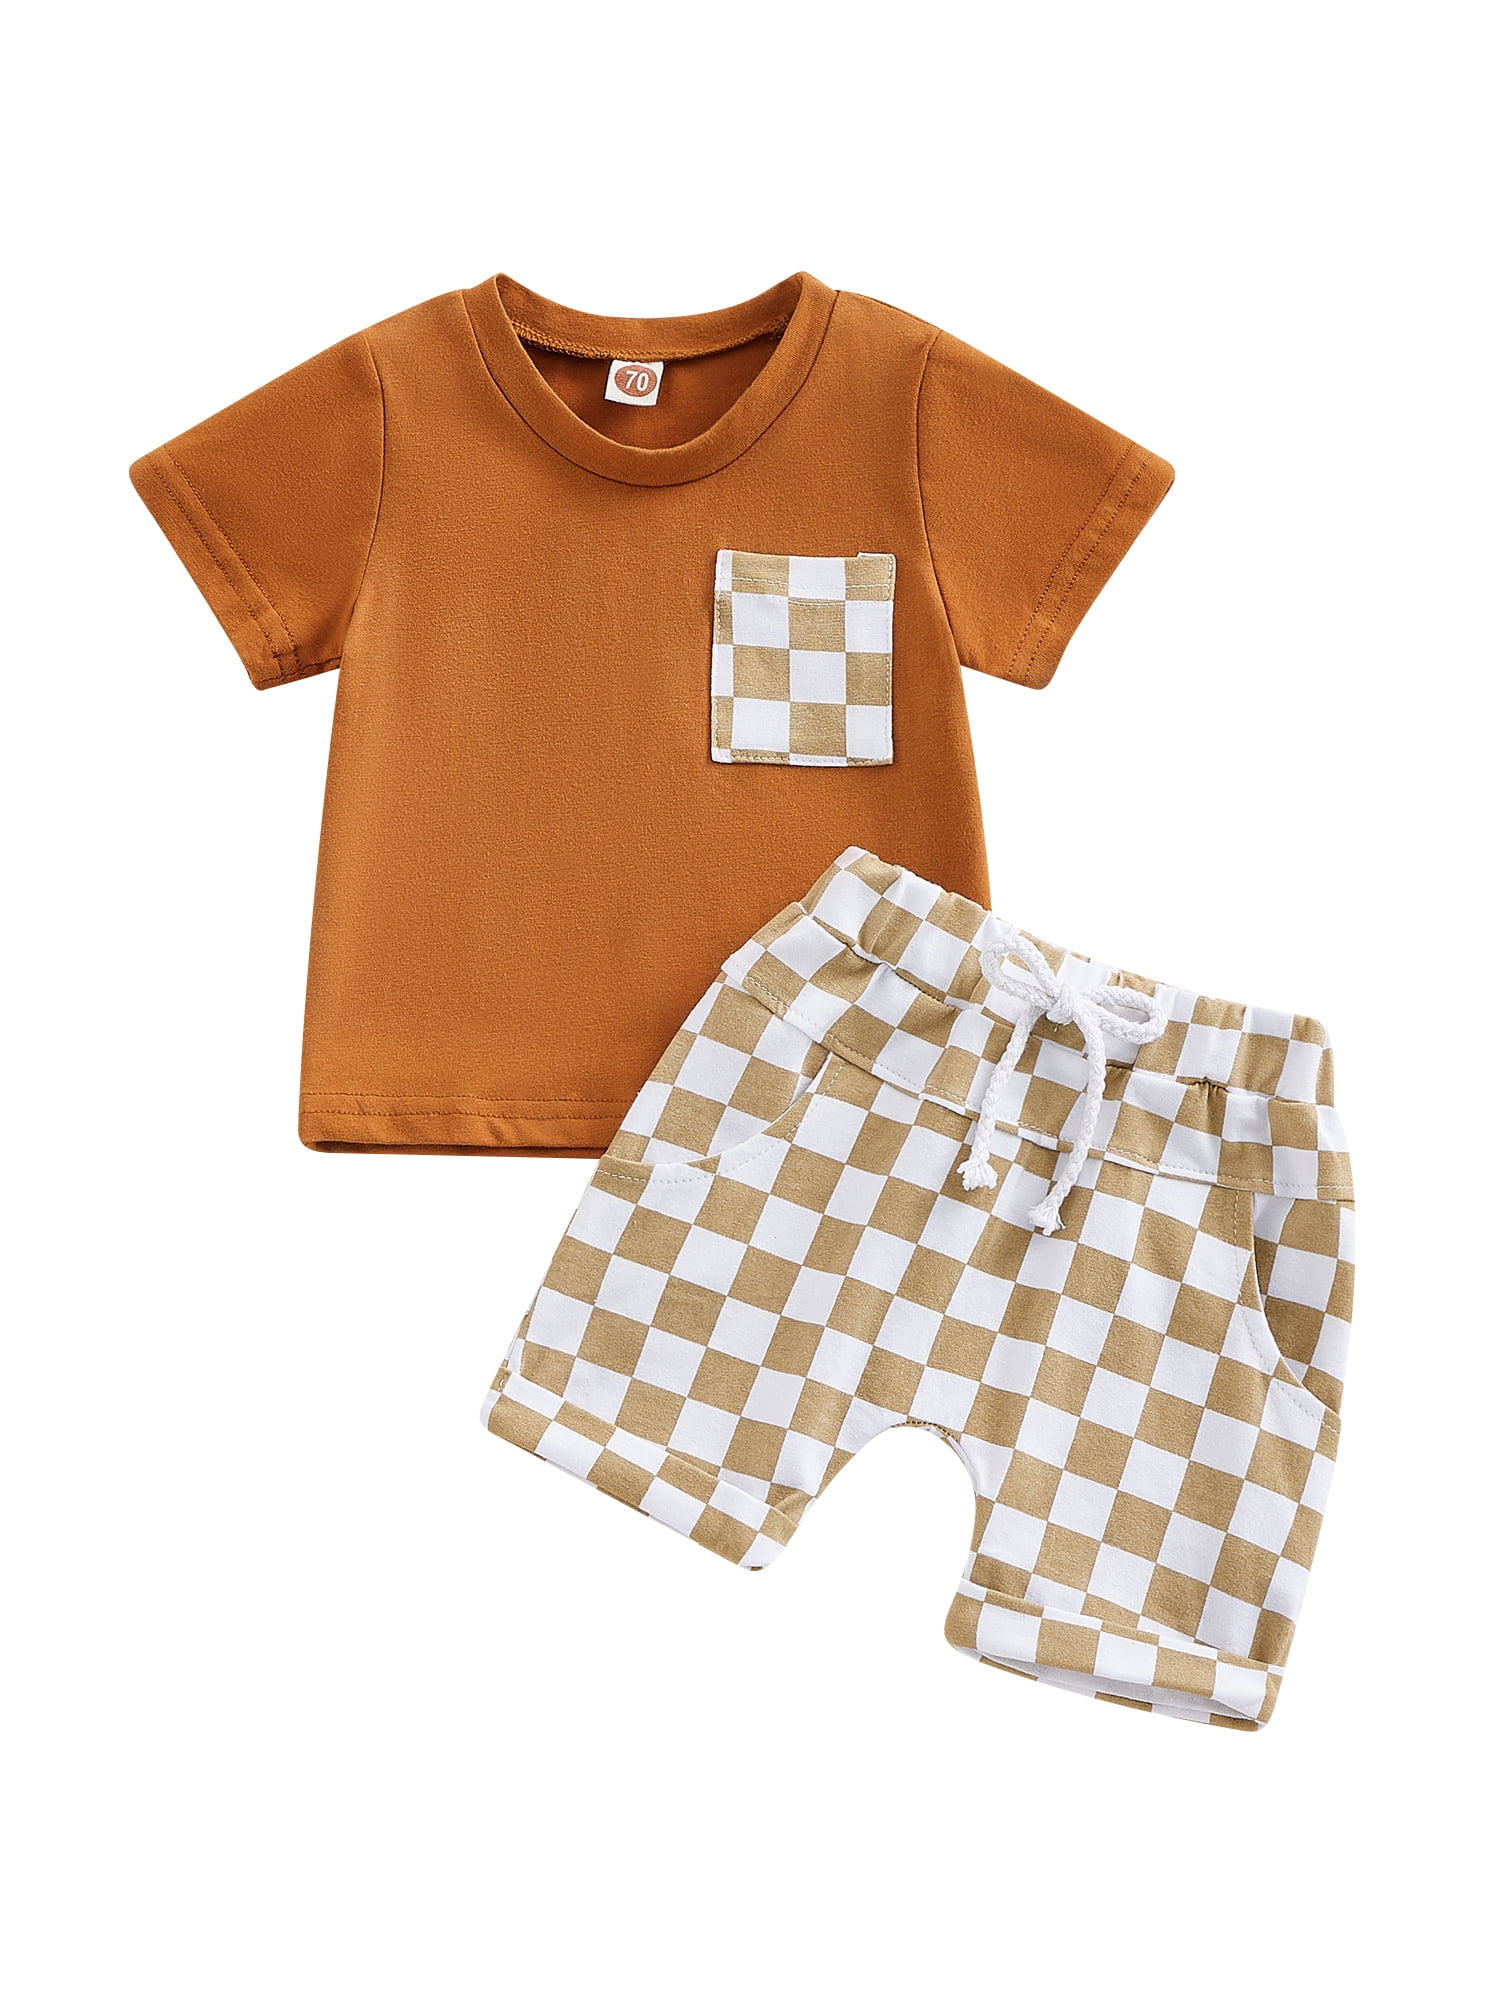 woshilaocai Baby Boy Girl Checkered Plaid Outfits